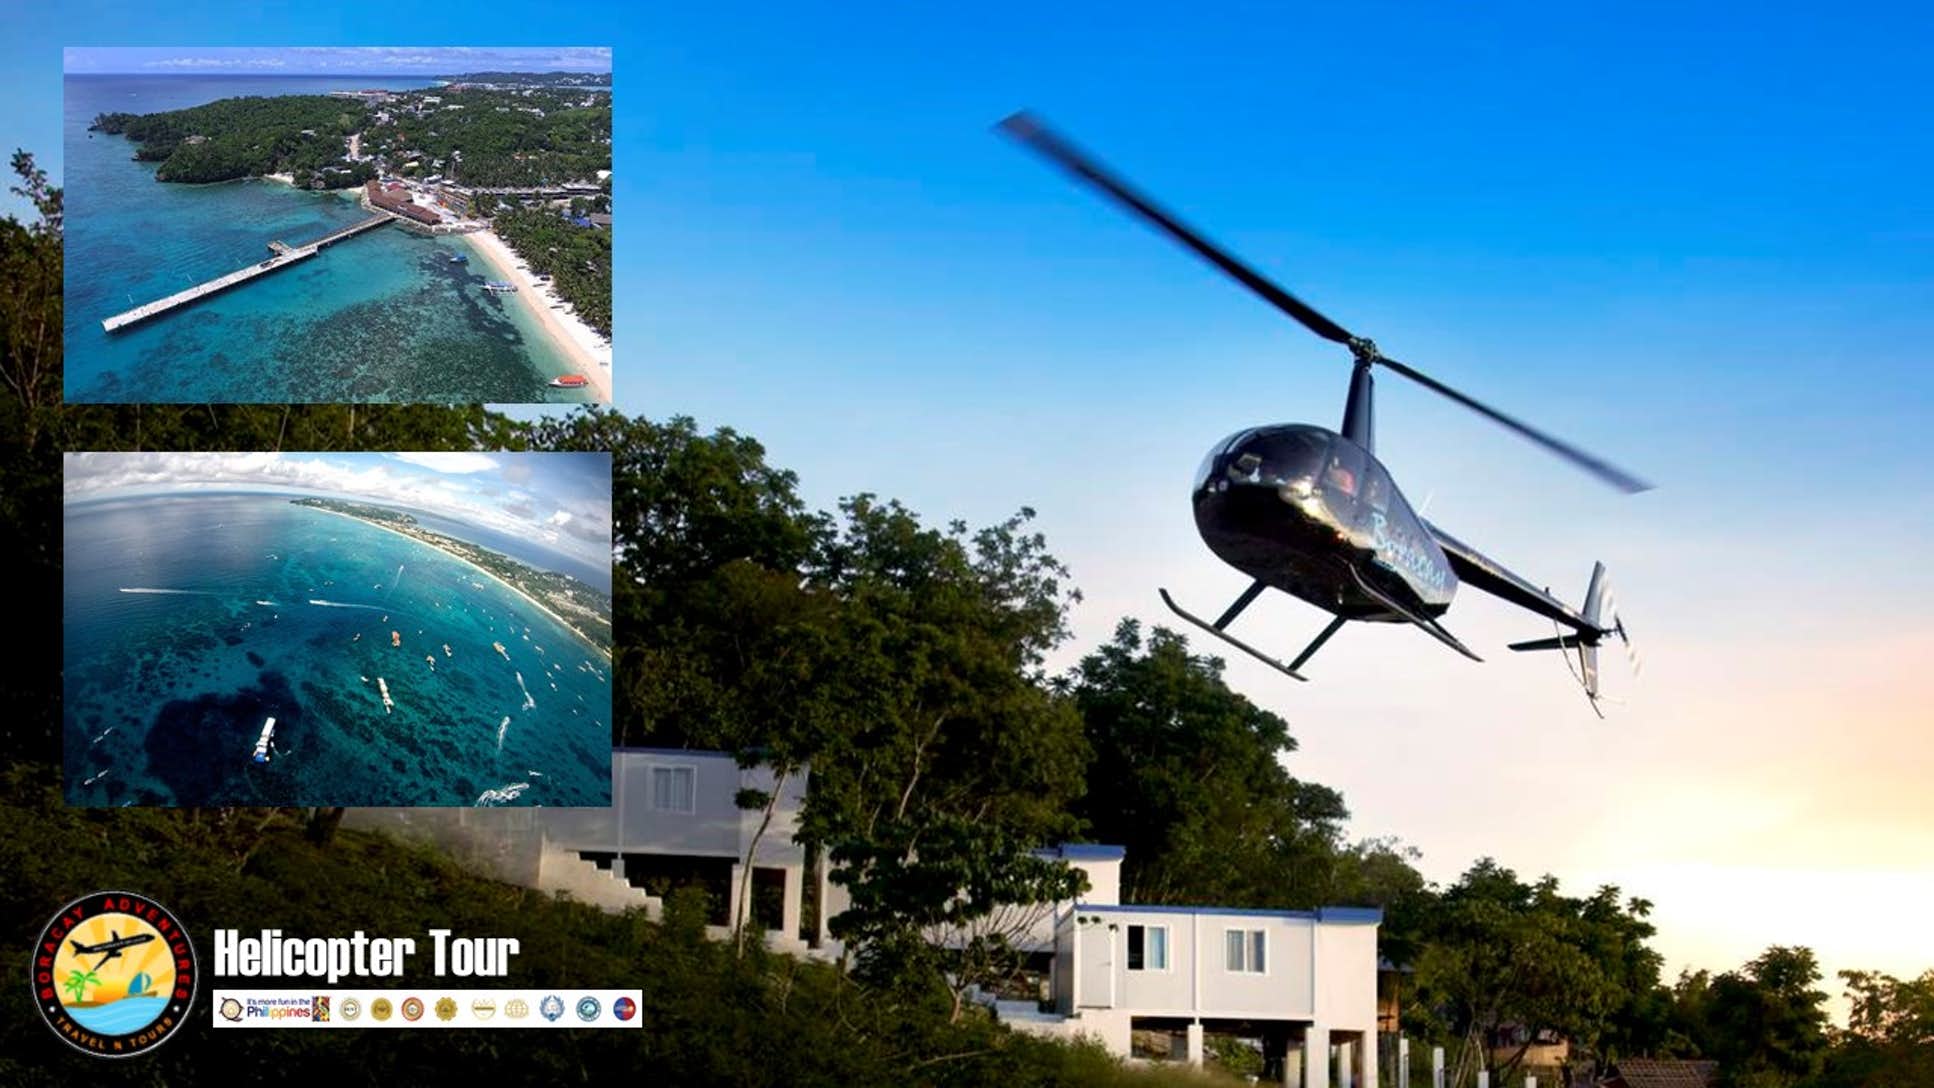 Enjoy the Helicopter tour around Boracay Island